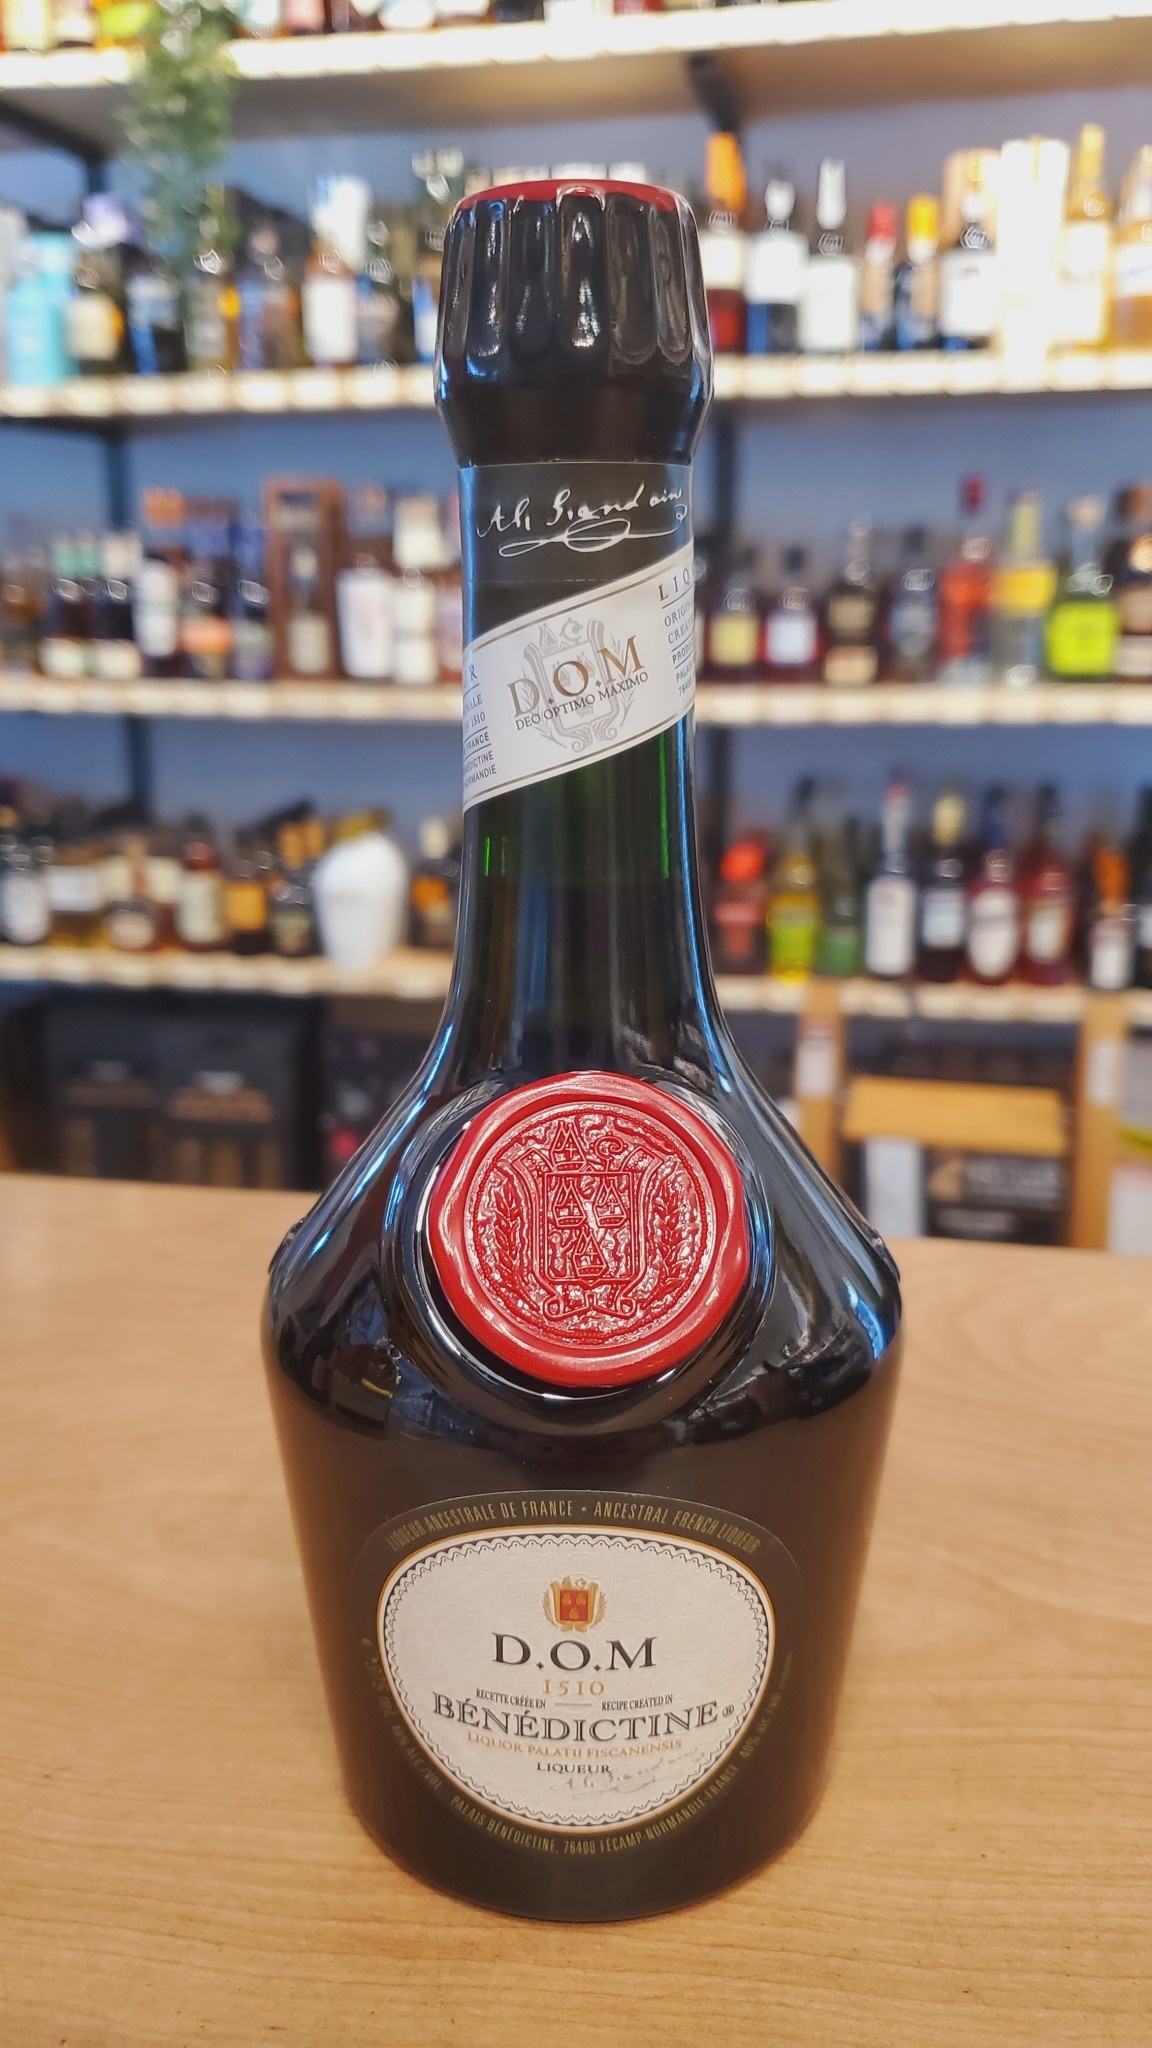 Benedictine (DOM) D.O.M. 1510, Benédictine 375ml 40.0% - Highlands Liquor